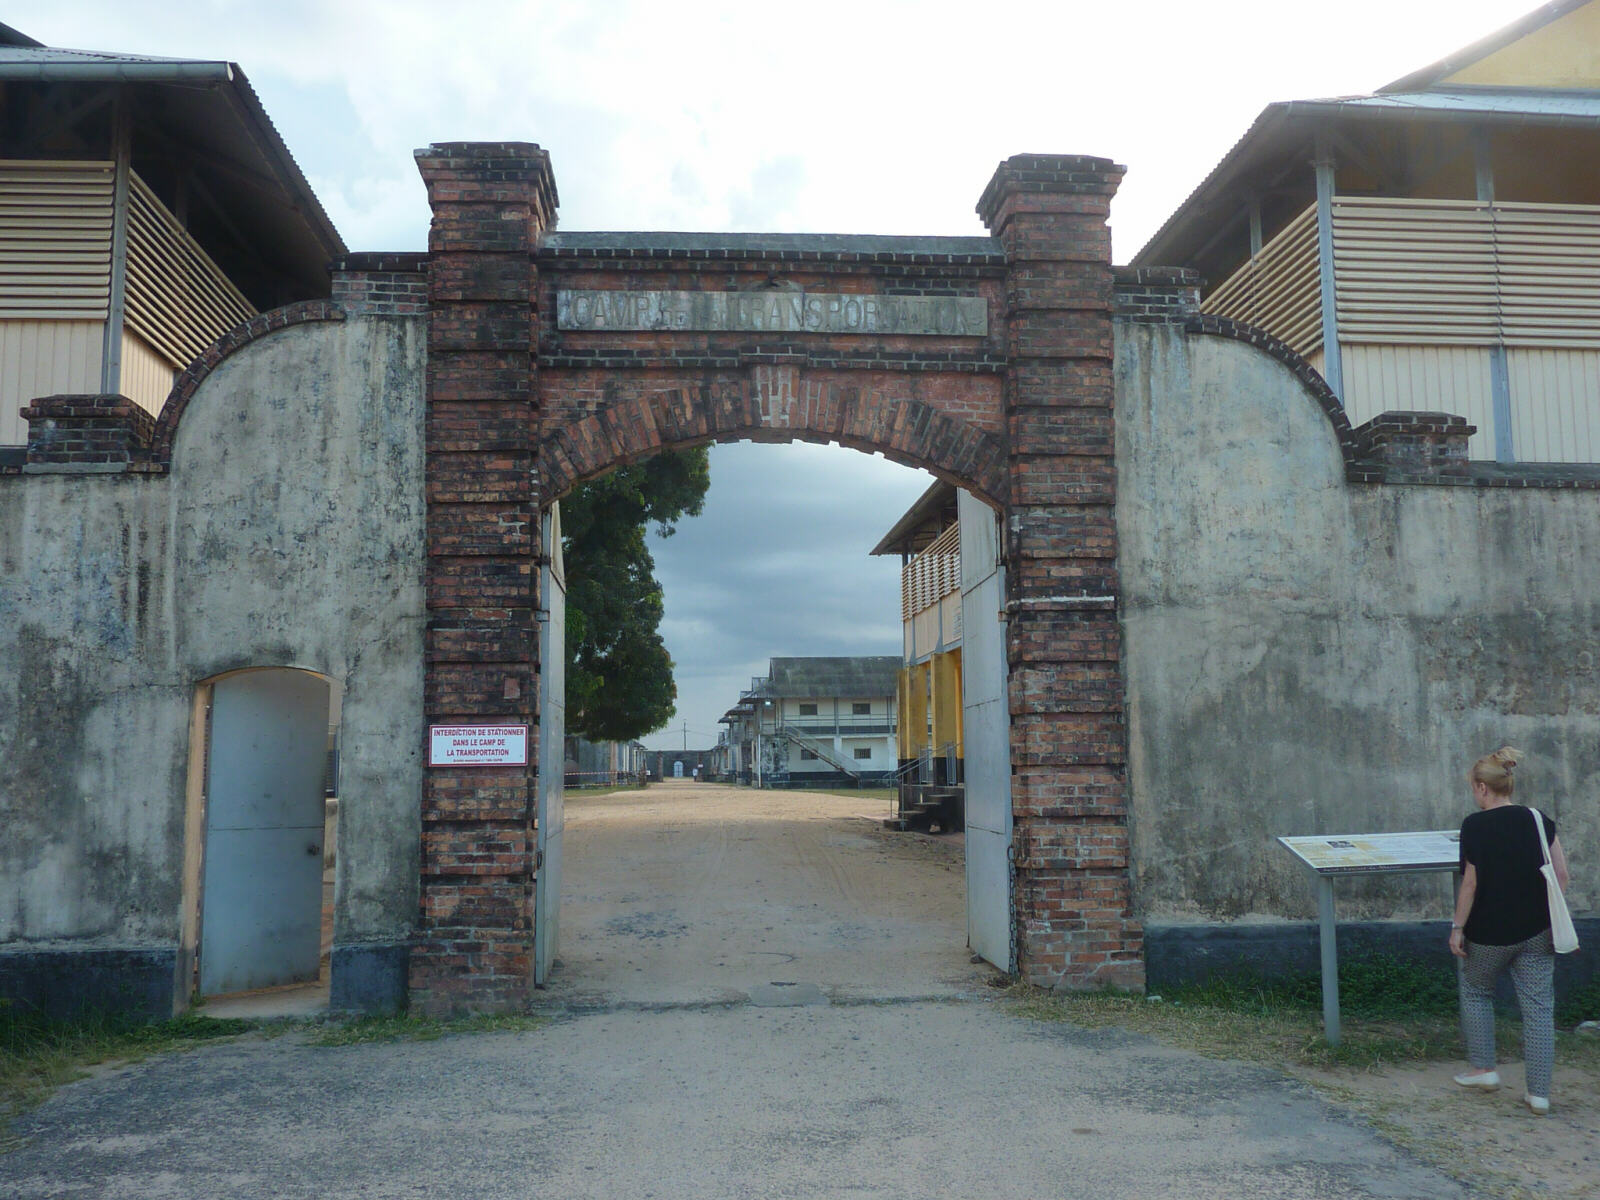 The Camp de Transportation (prison) in St Laurent, French Guyane